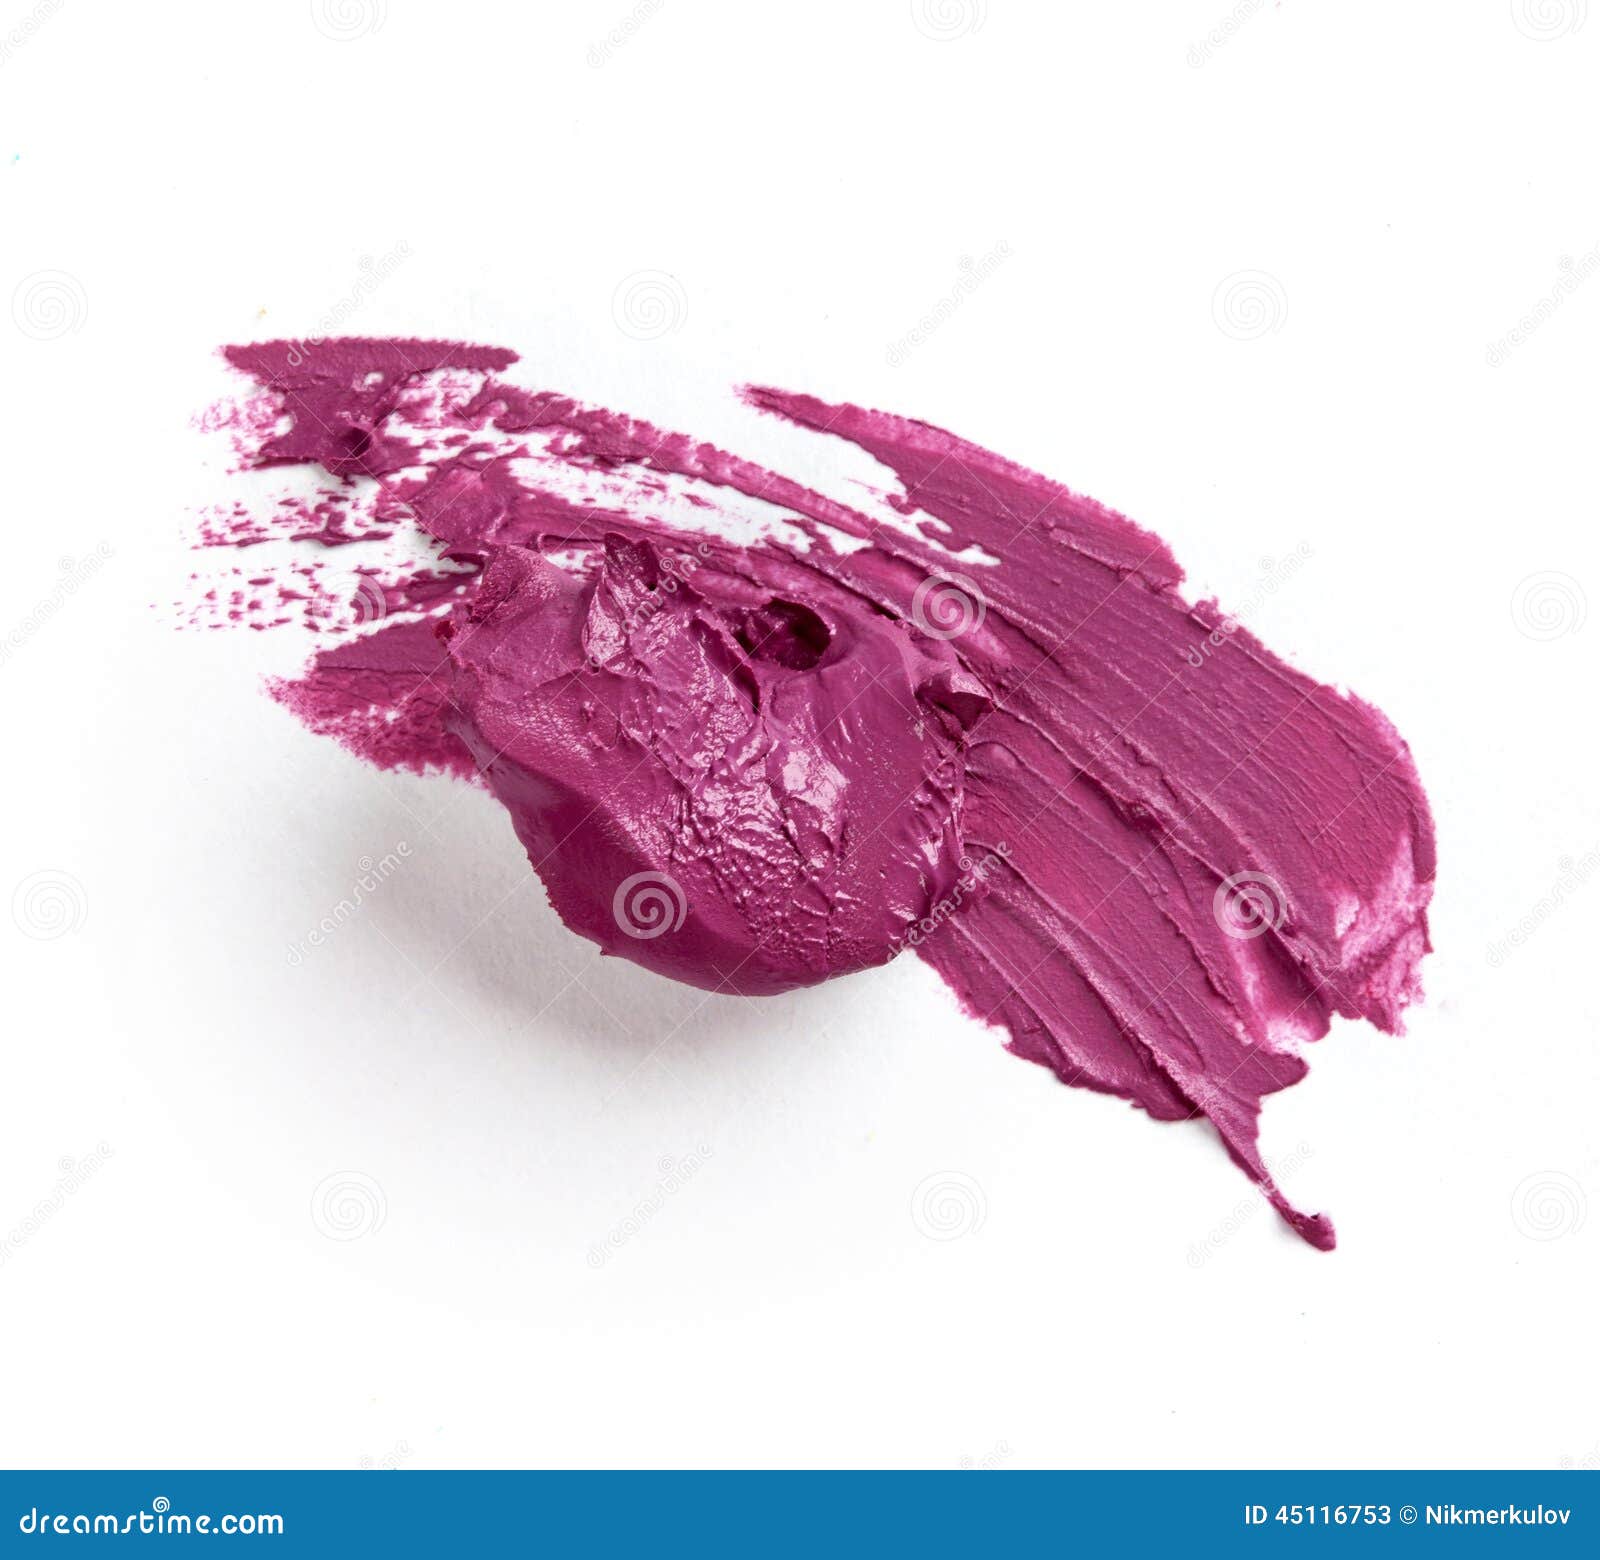 smudged purple lipstick